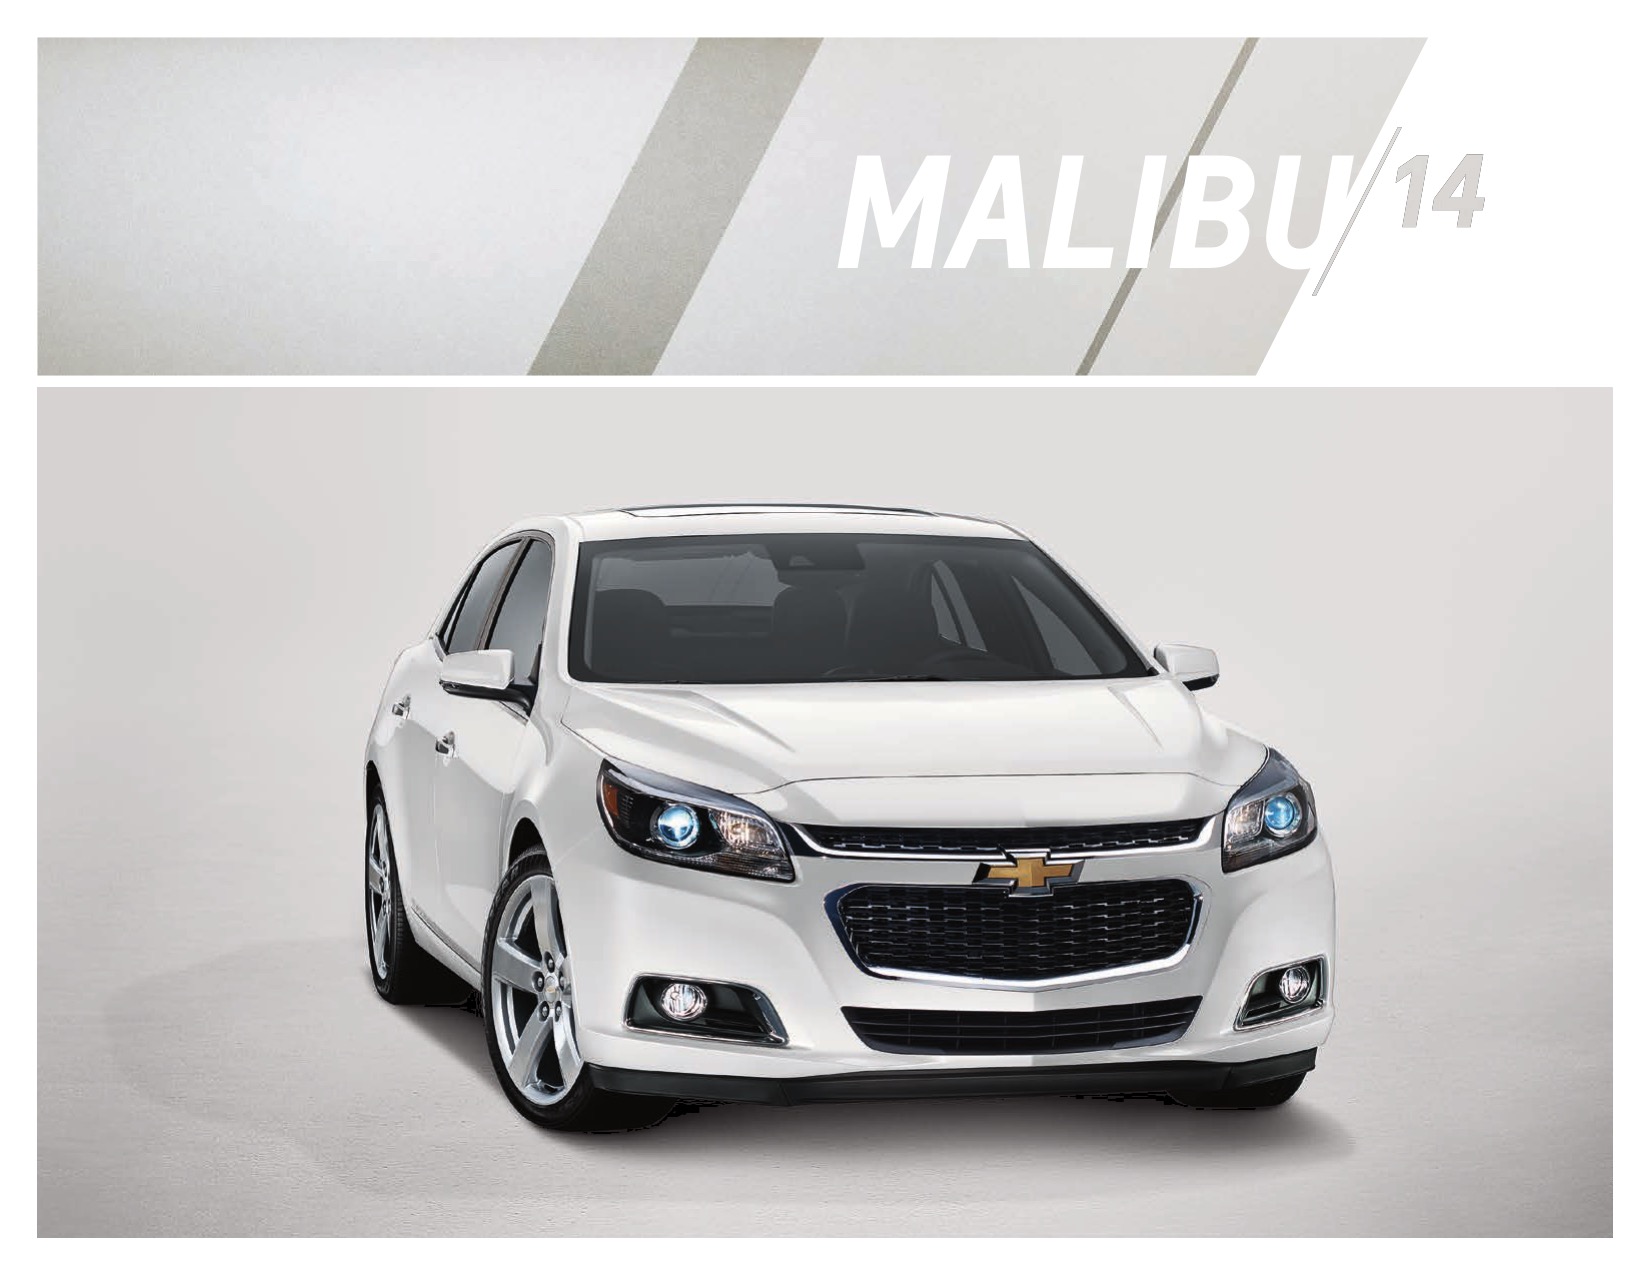 2014 Chevrolet Malibu Brochure